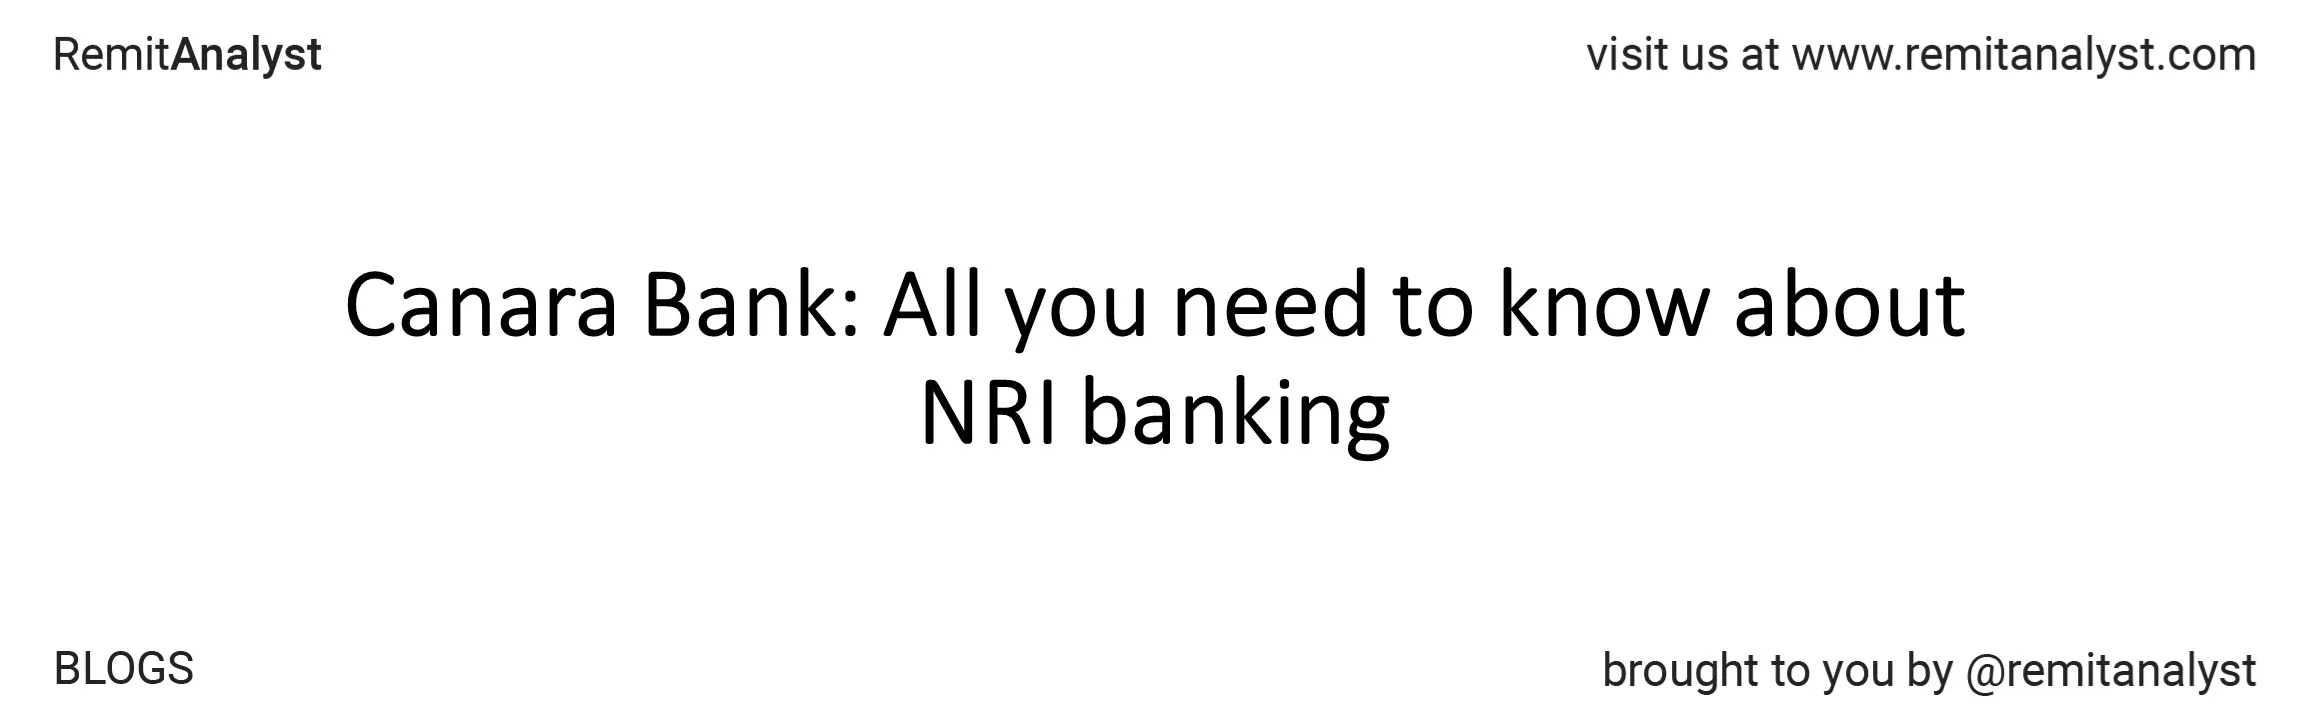 canara-bank-nri-services-title